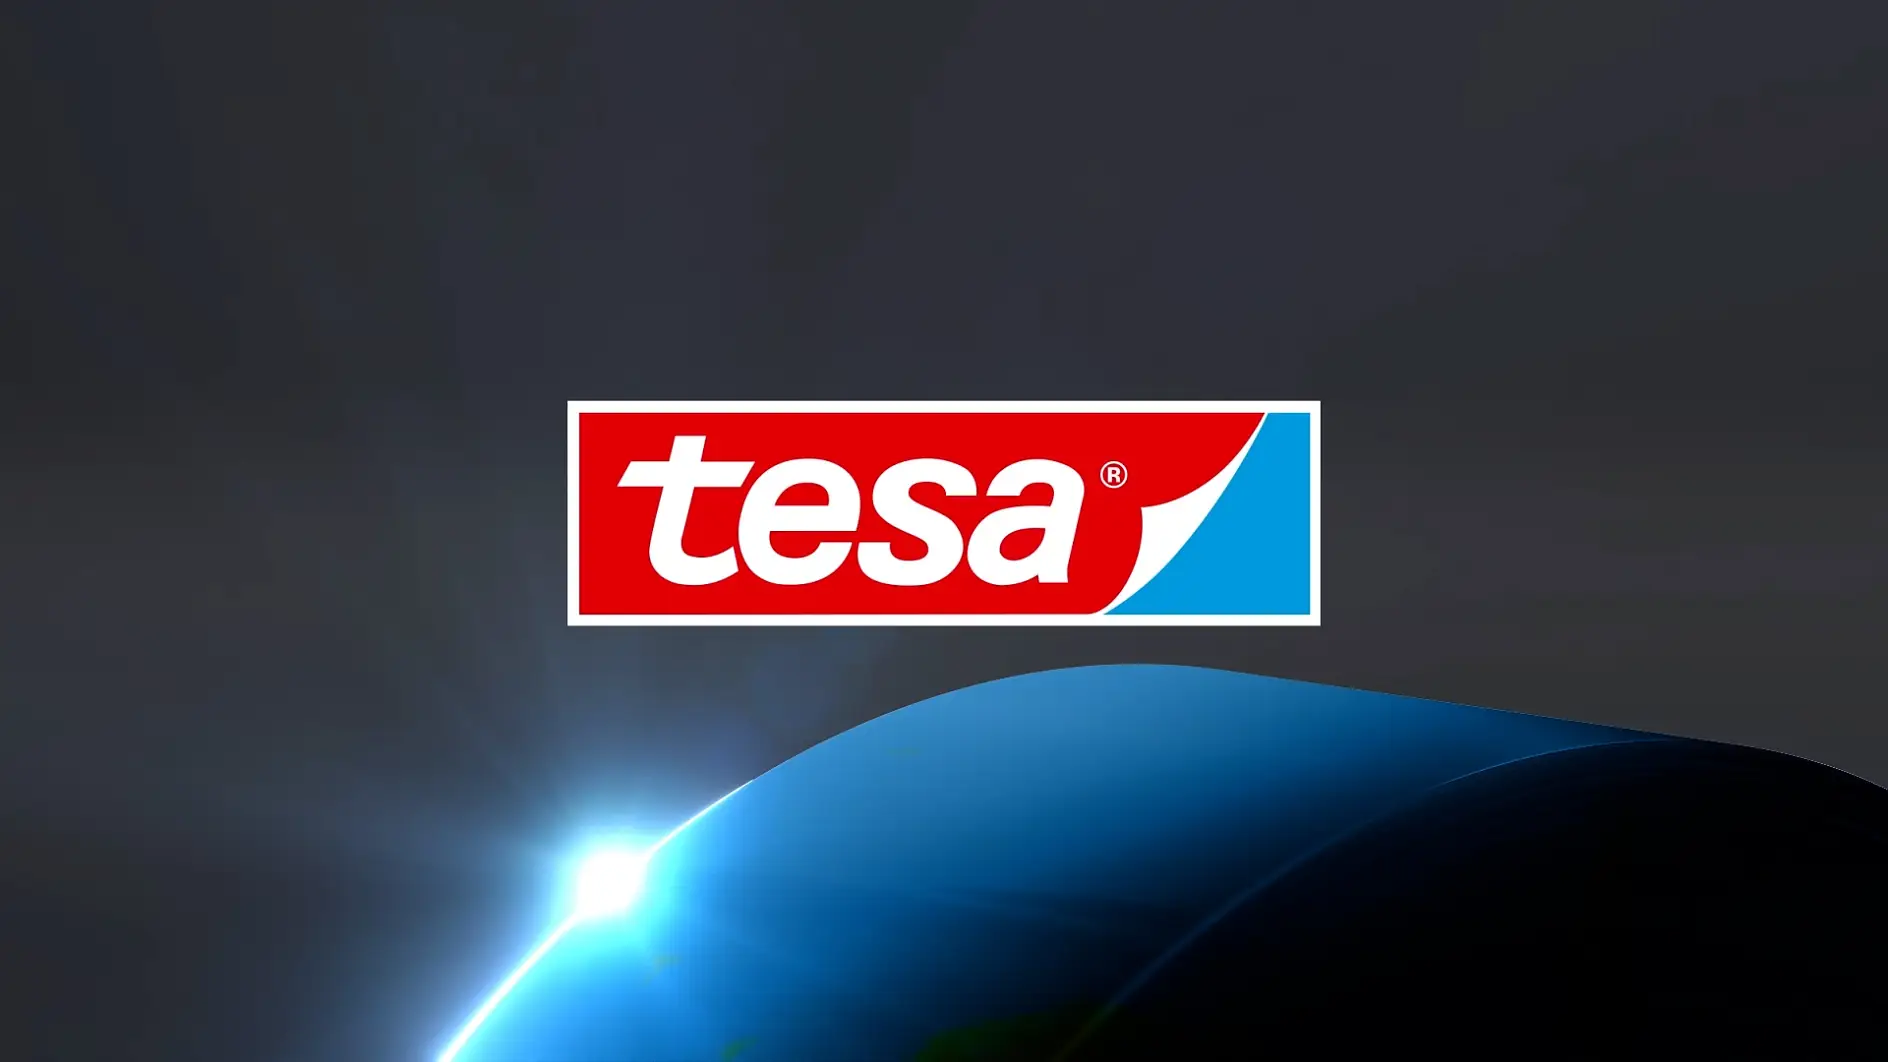 ITC-tesa-4965-Original-Next-Gen-campaign-video-CN